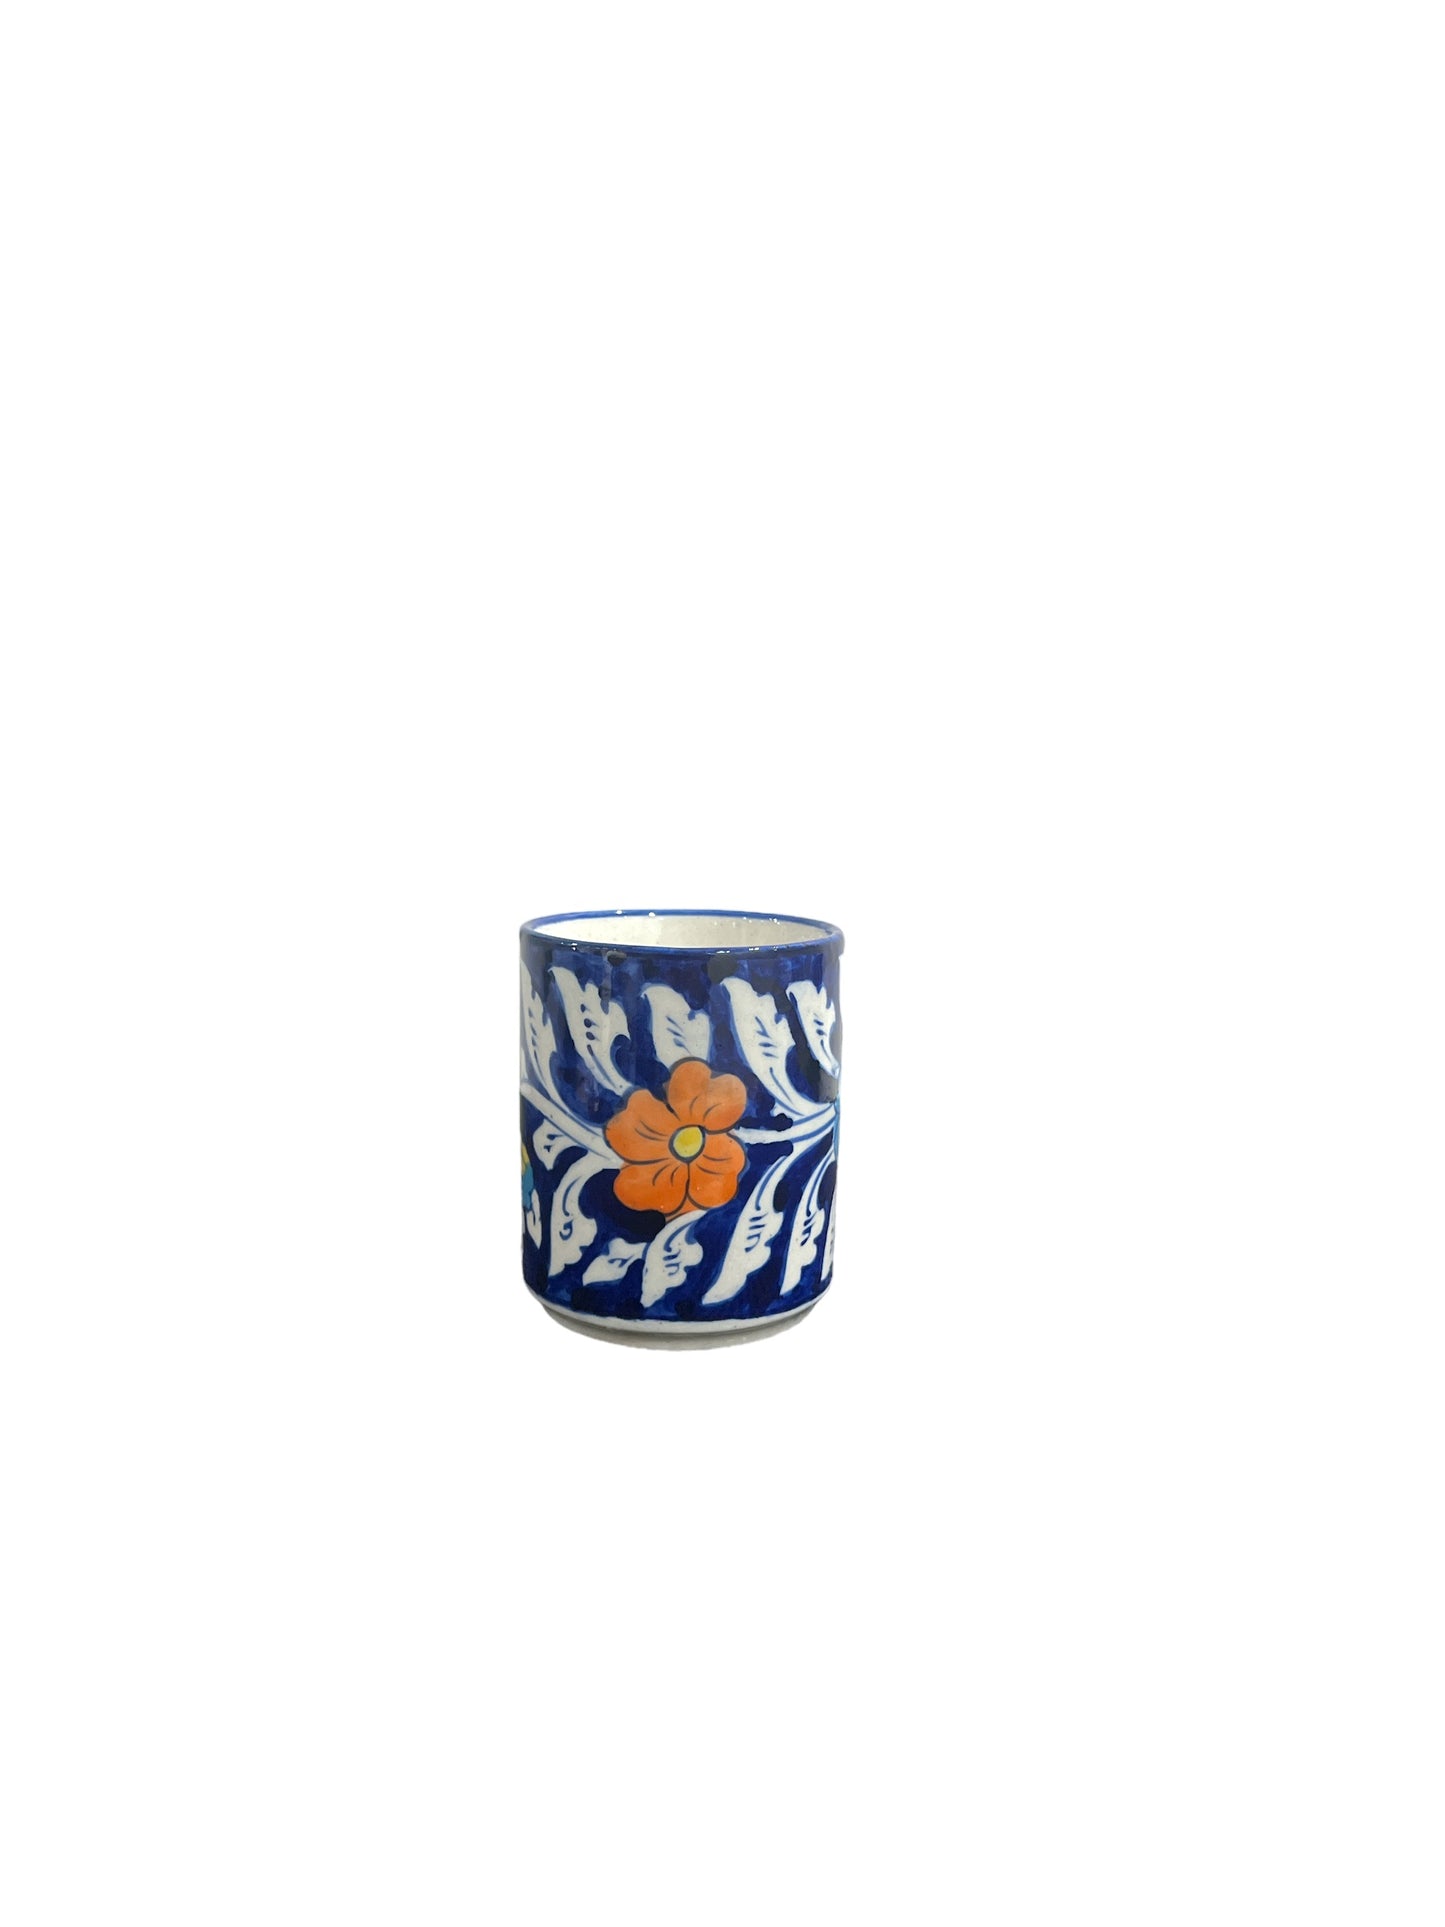 Blue Pottery Tea Coffee Mug - Floral Fan Design (Set of 2)